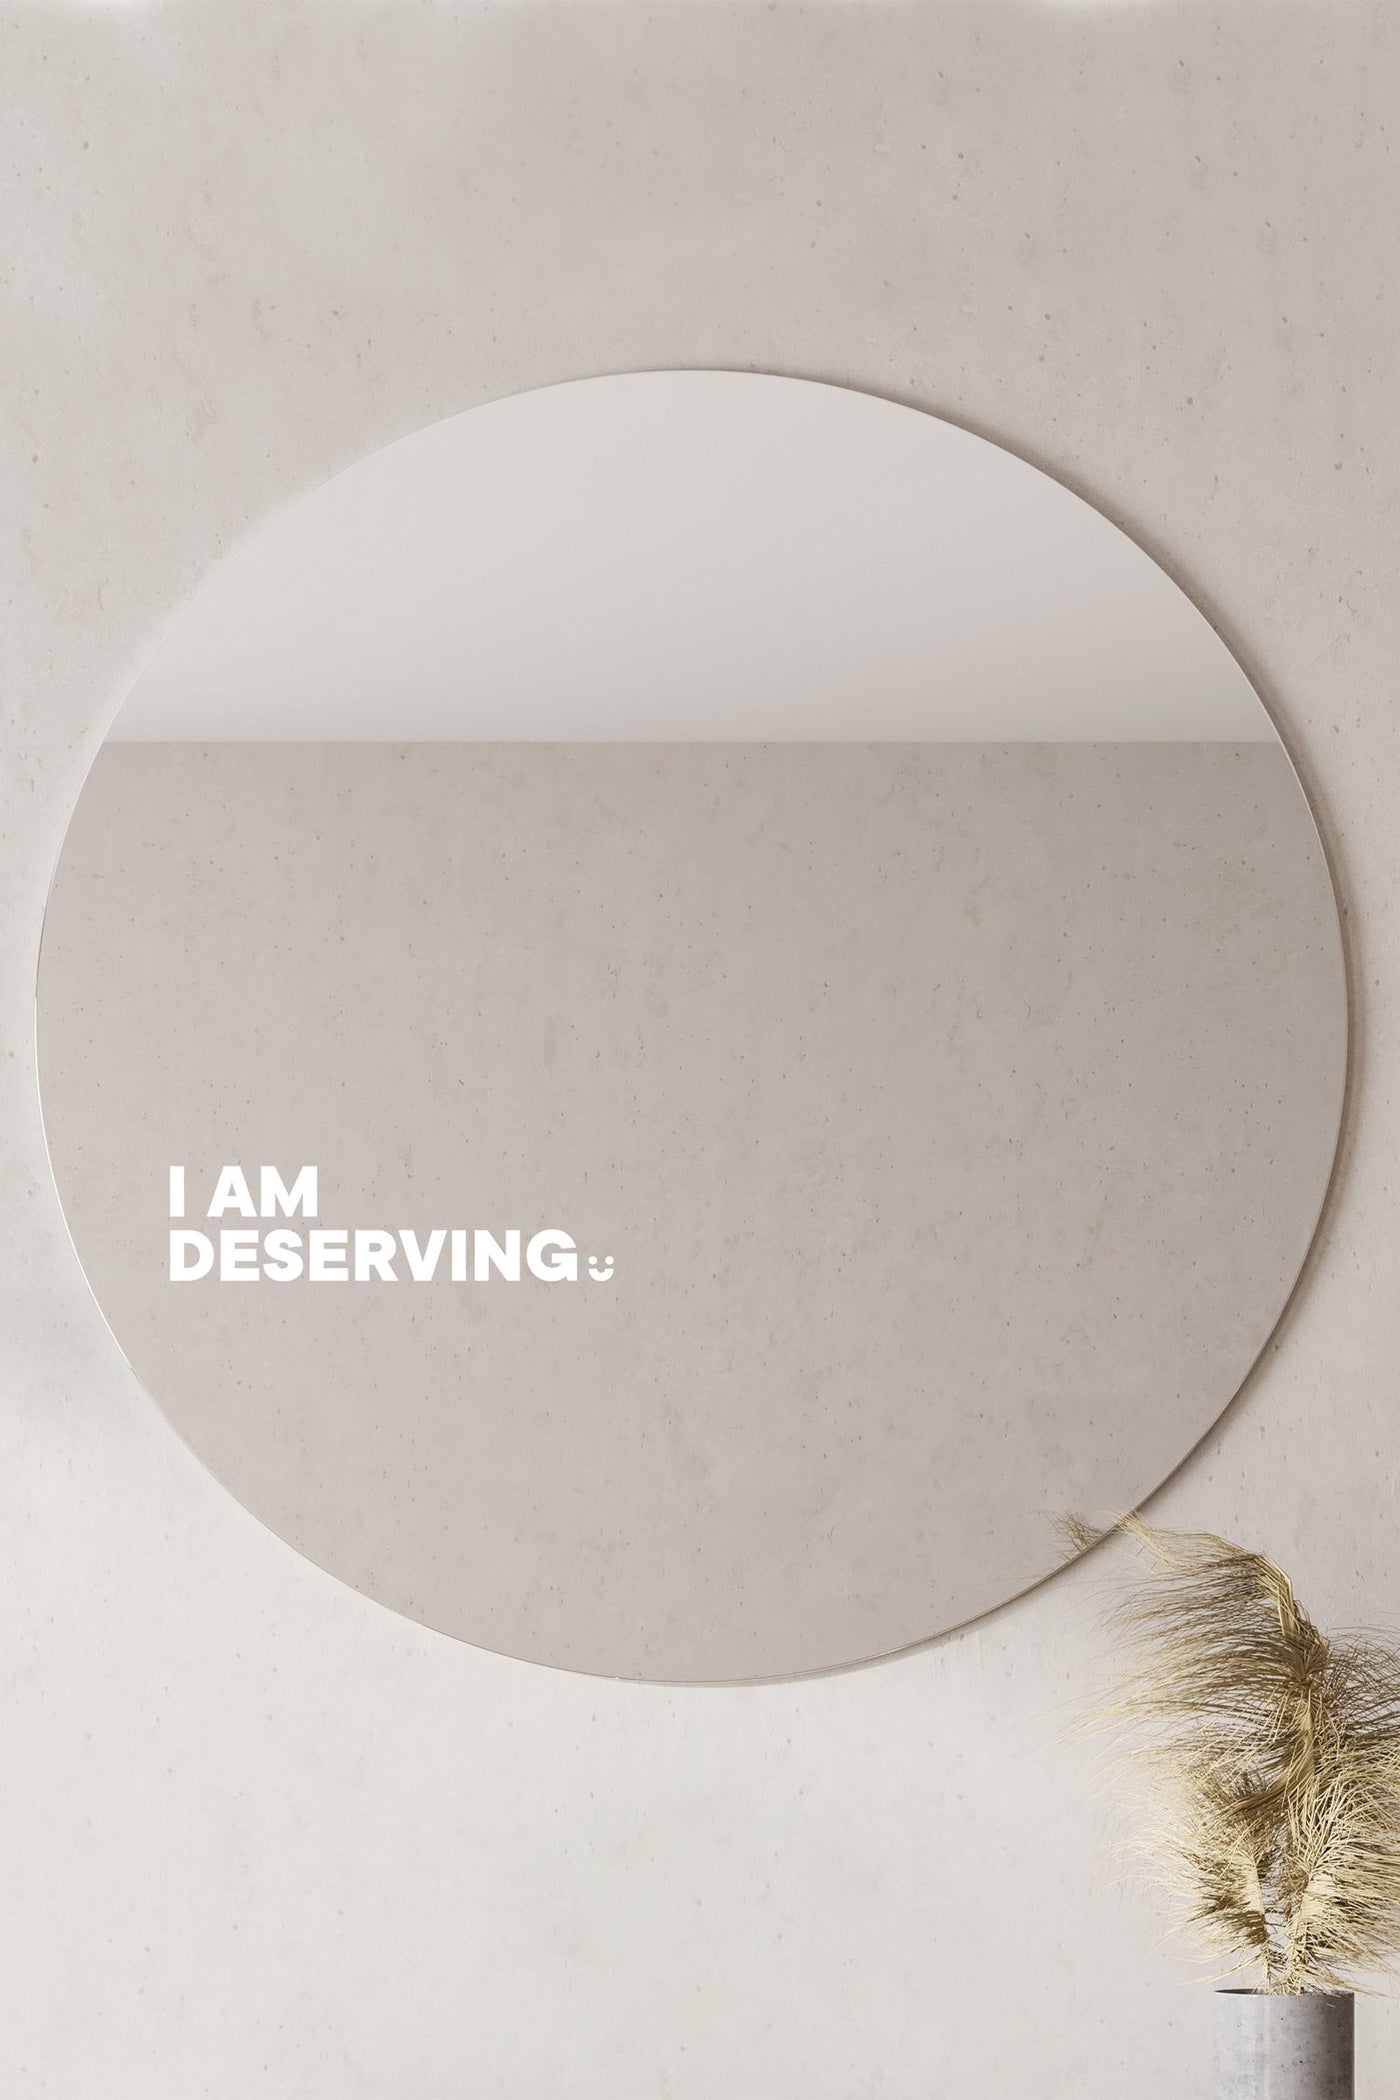 I AM DESERVING. - Affirmation Mirror Sticker Affirmation Stickers Selfawear 